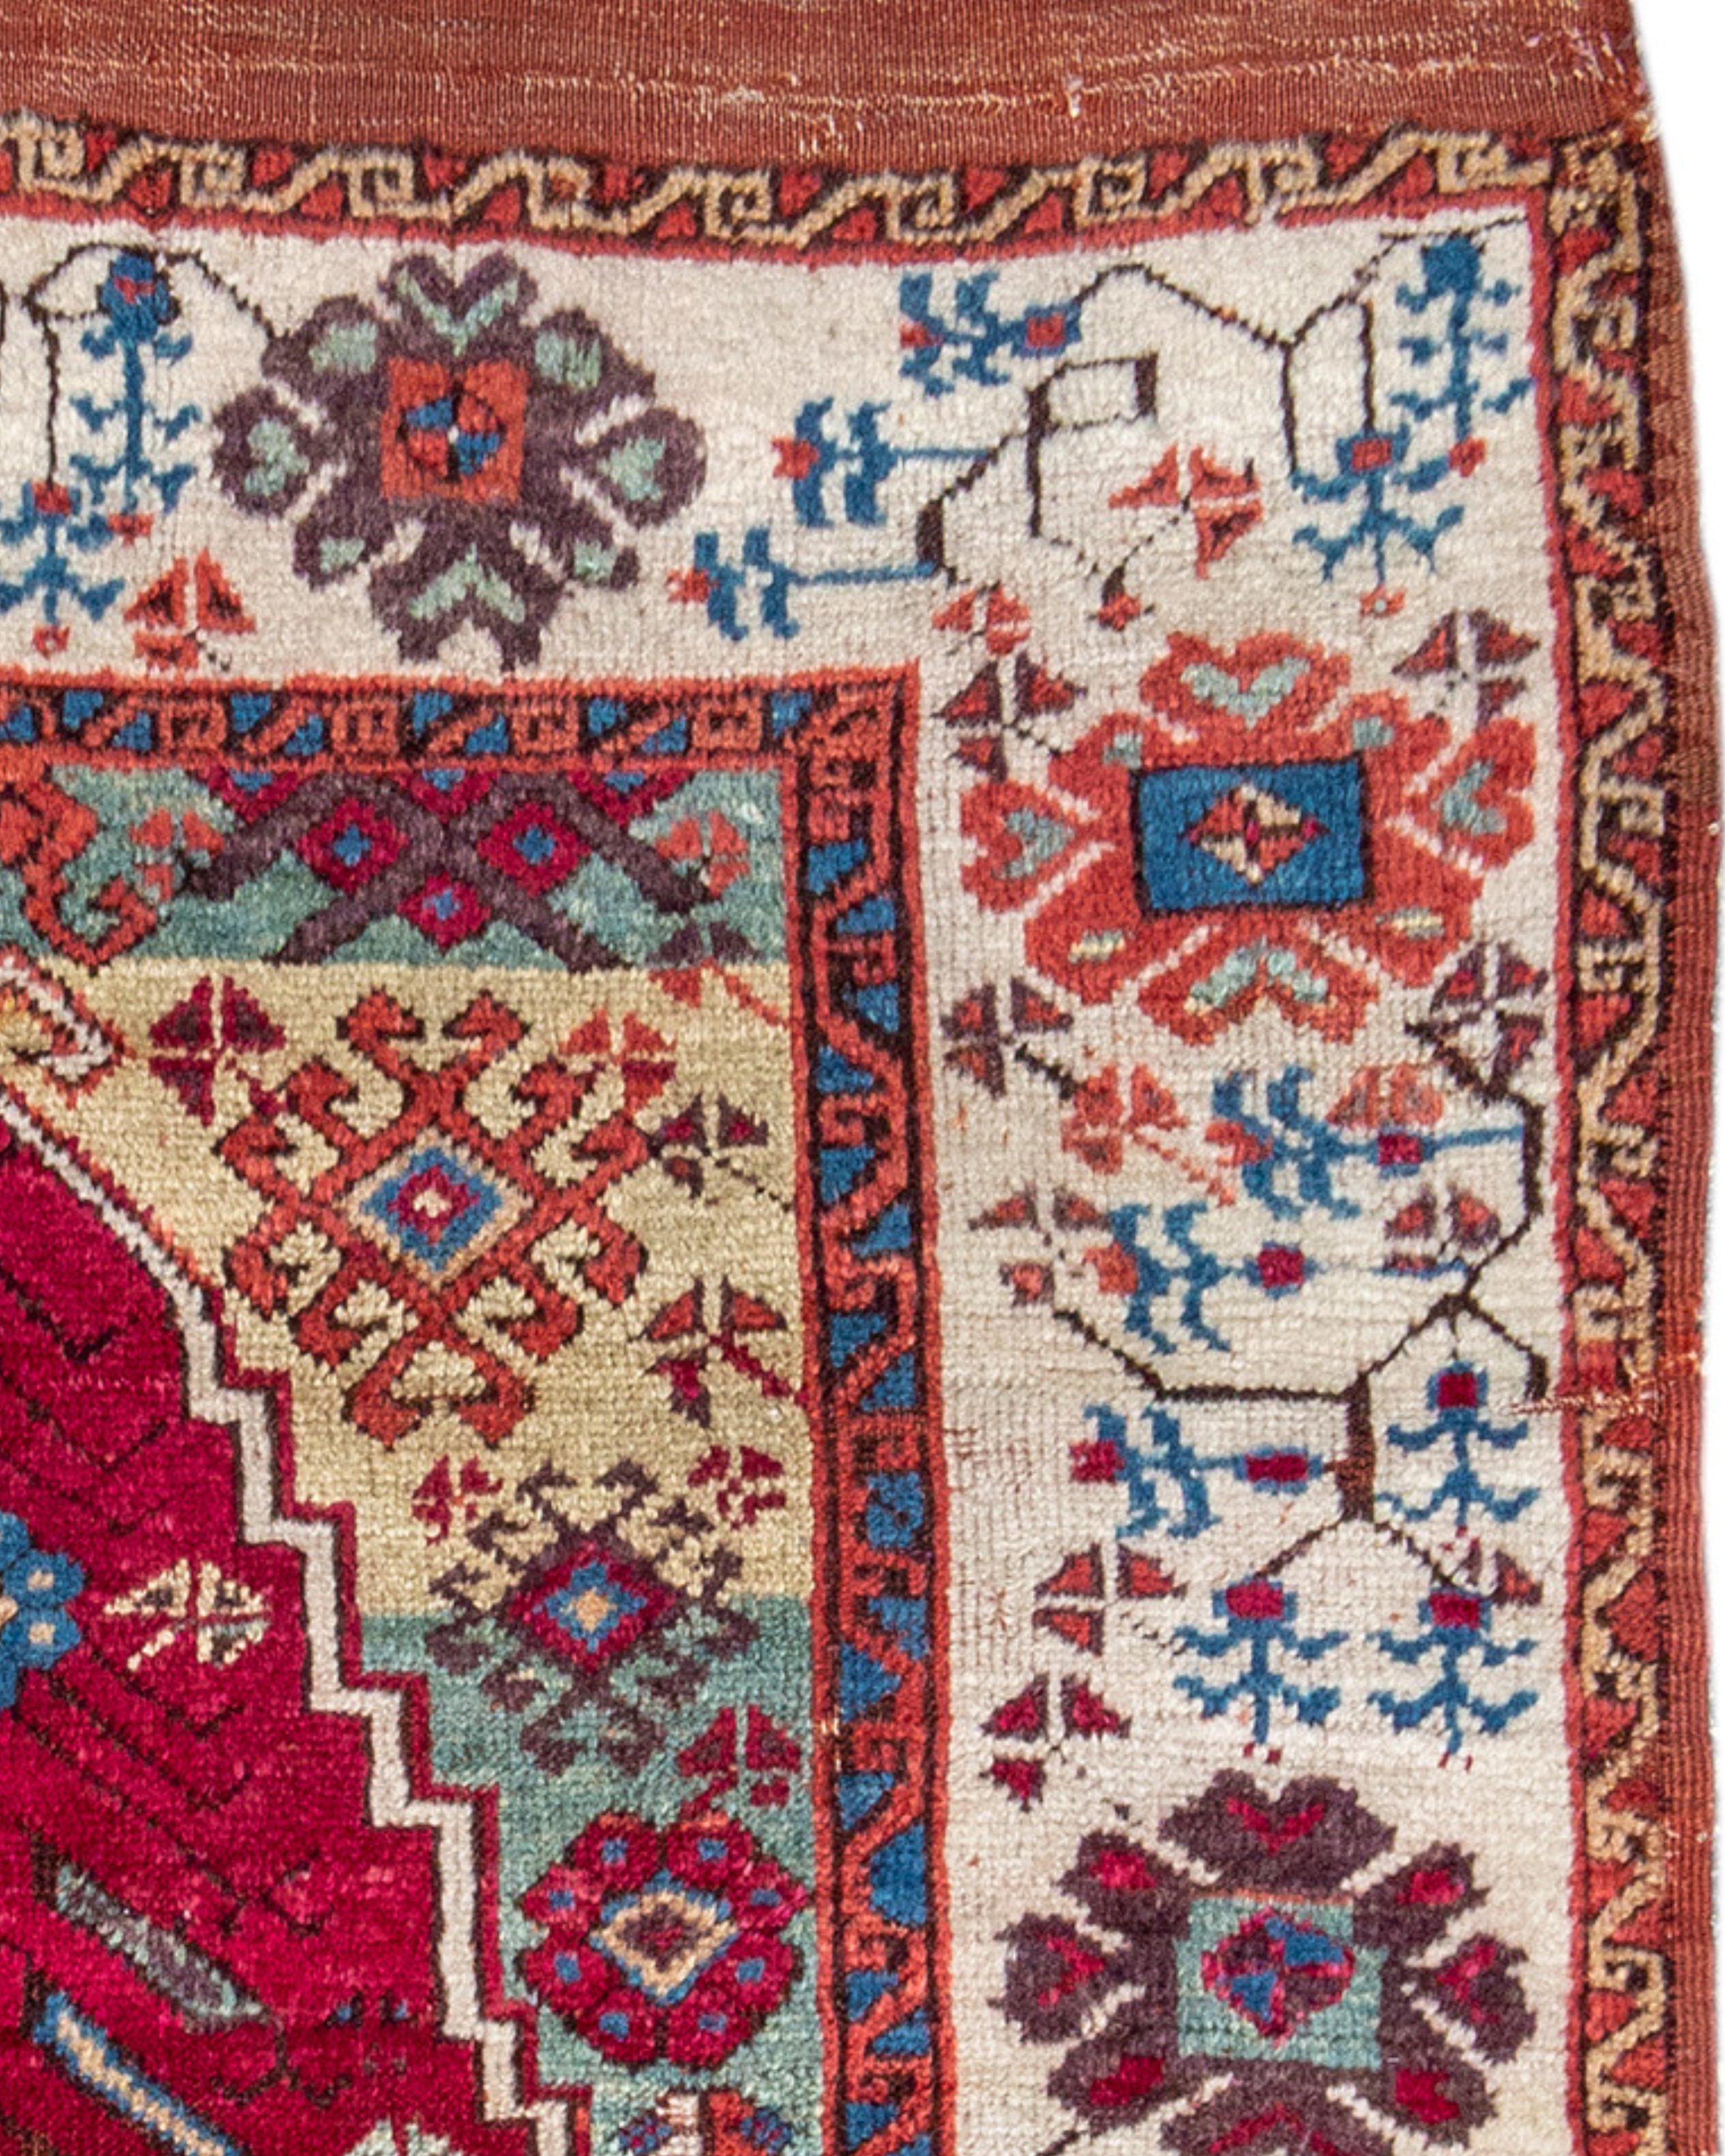 Antique Anatolian Prayer Rug, 19th Century

Additional Information:
Dimensions: 3'2